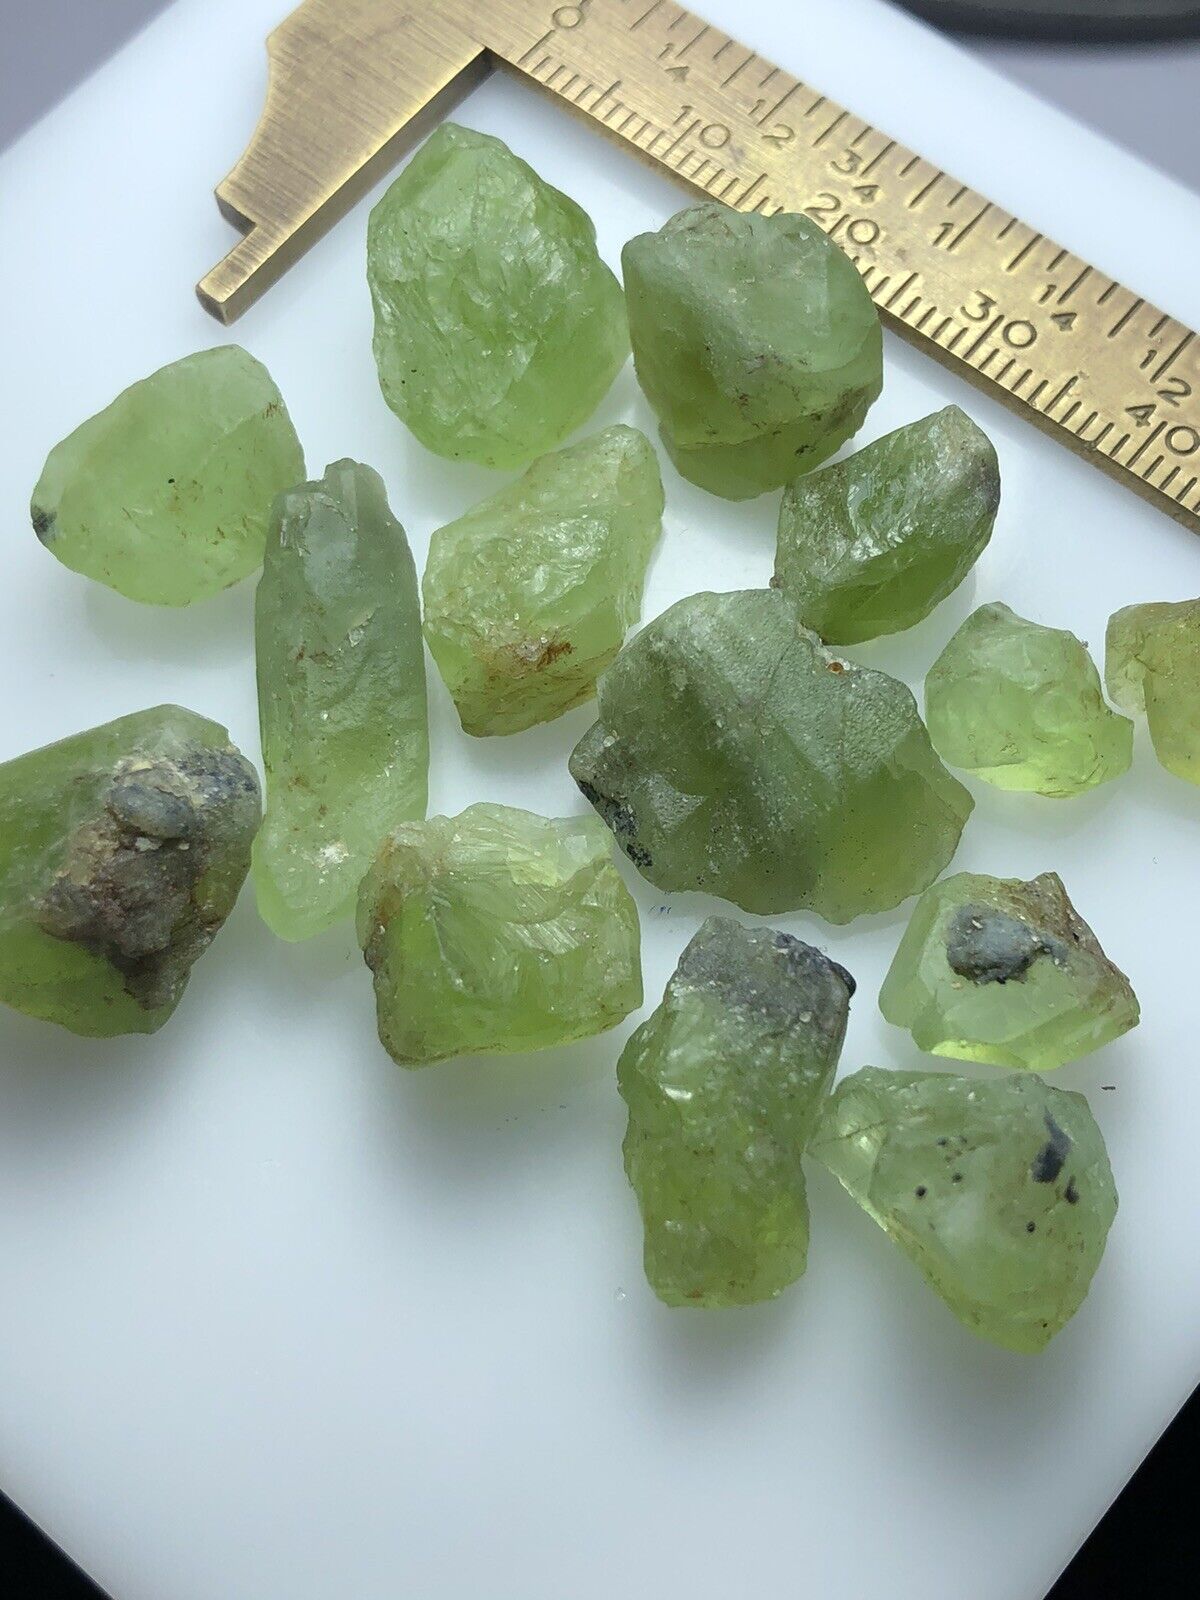 151 Crt / Natural Green Rough Peridot Crystal From Sopat Pakistan Mine